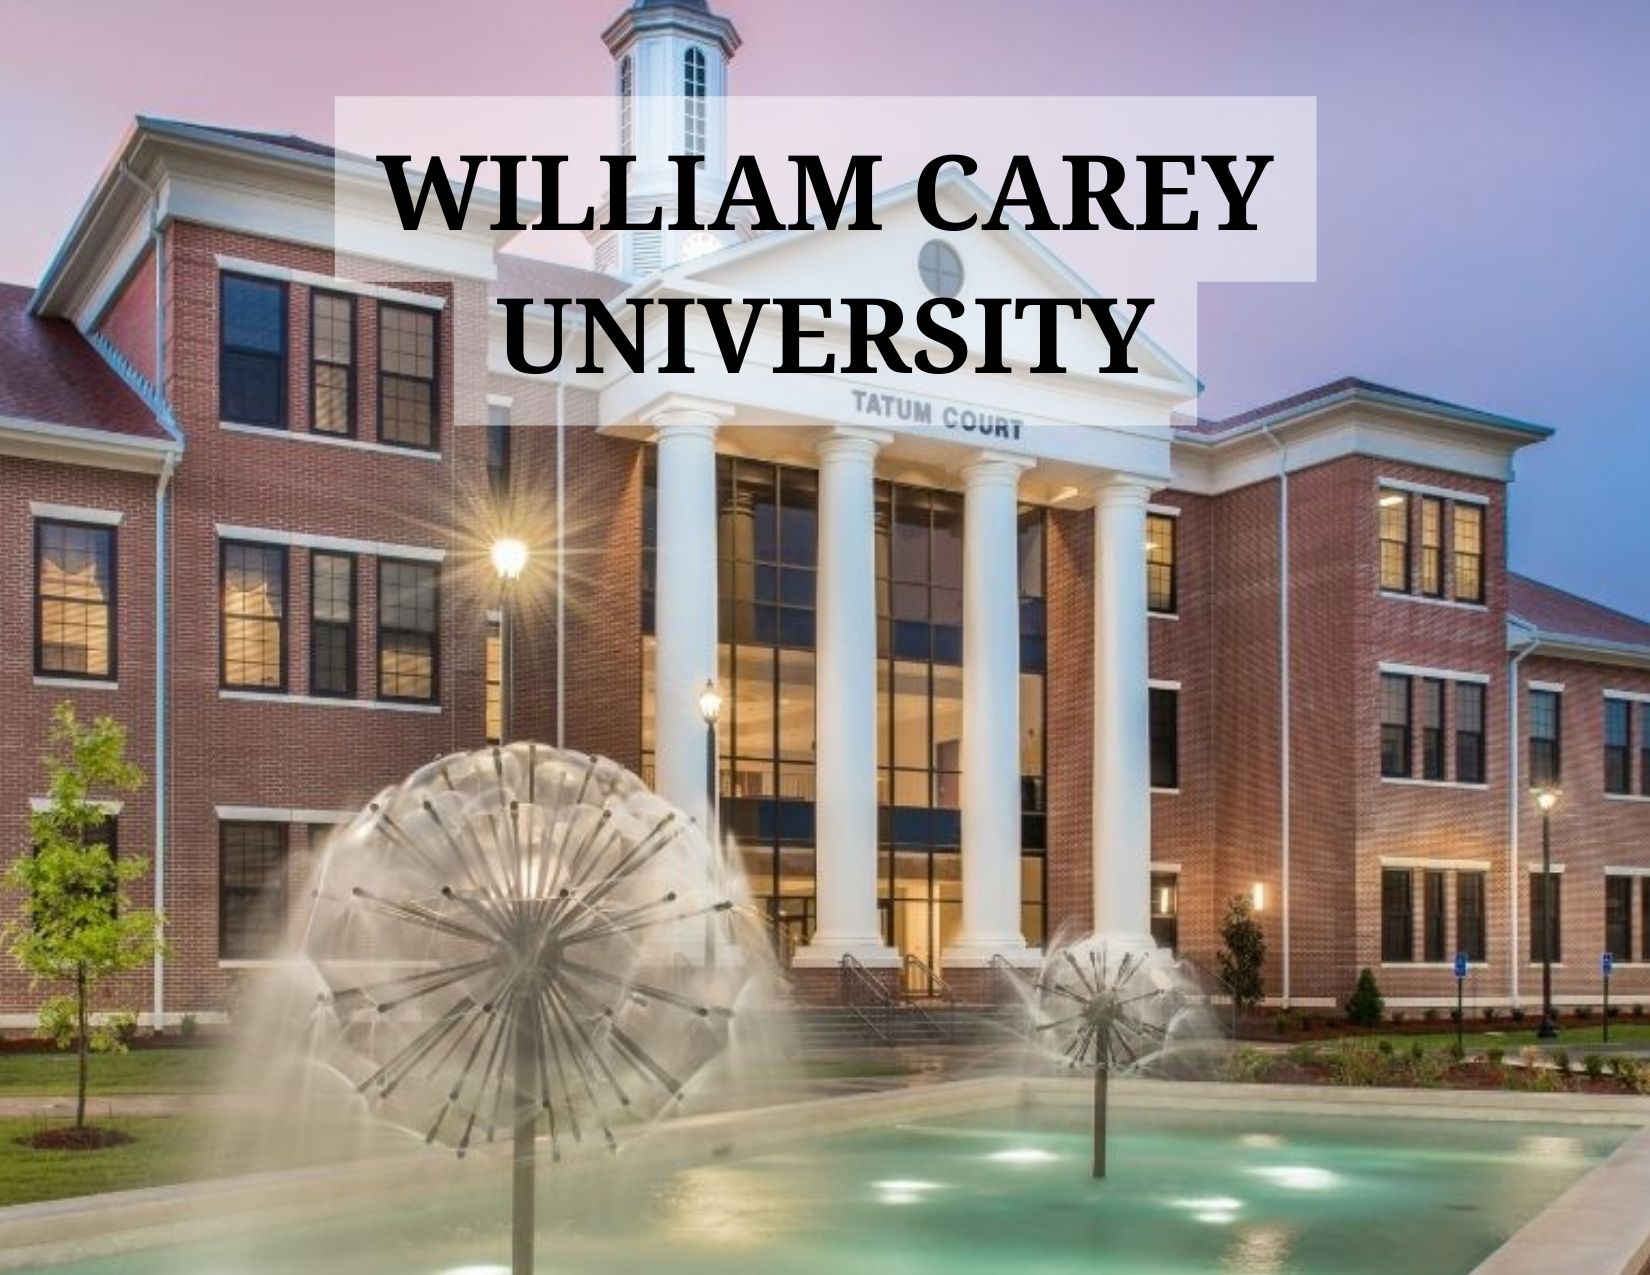 Williams Carey University